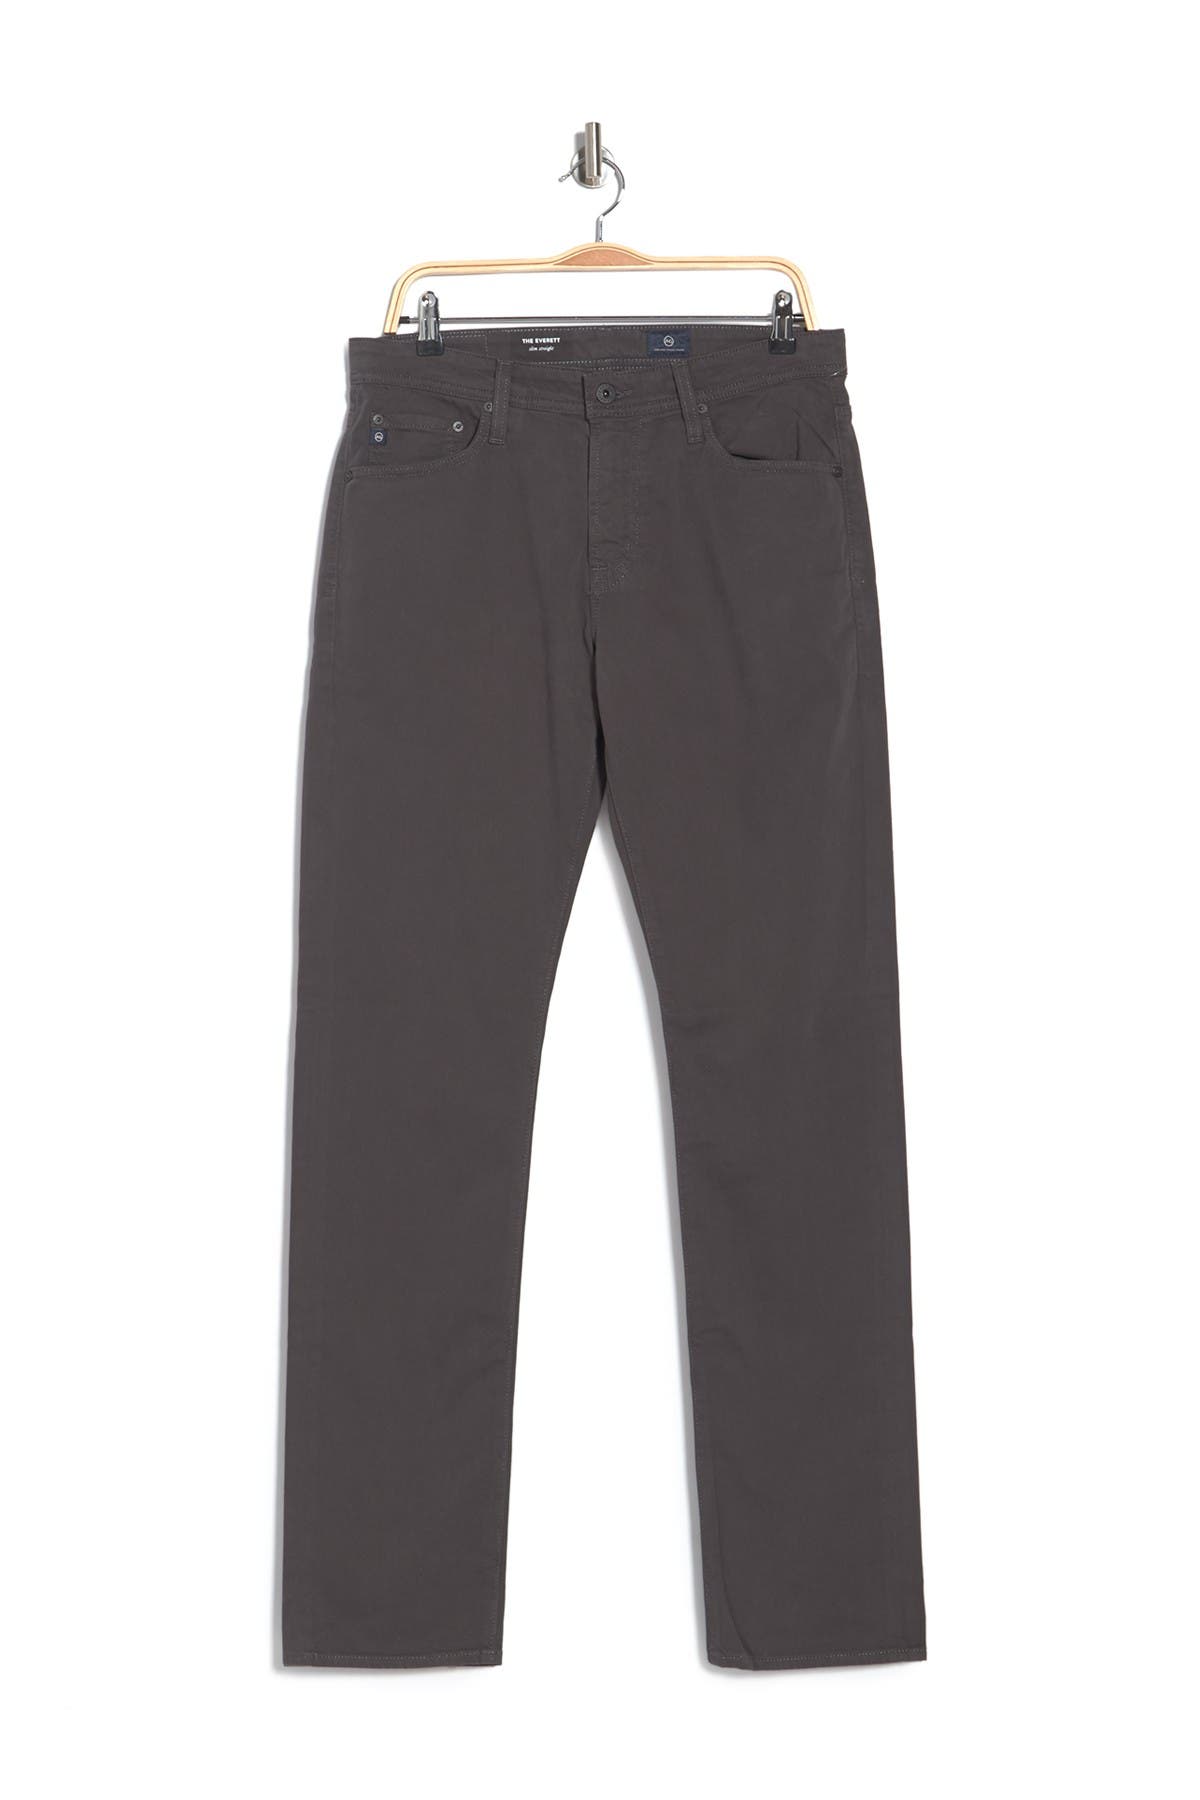 Ag Everett Slim Straight Jeans In Medium Grey3